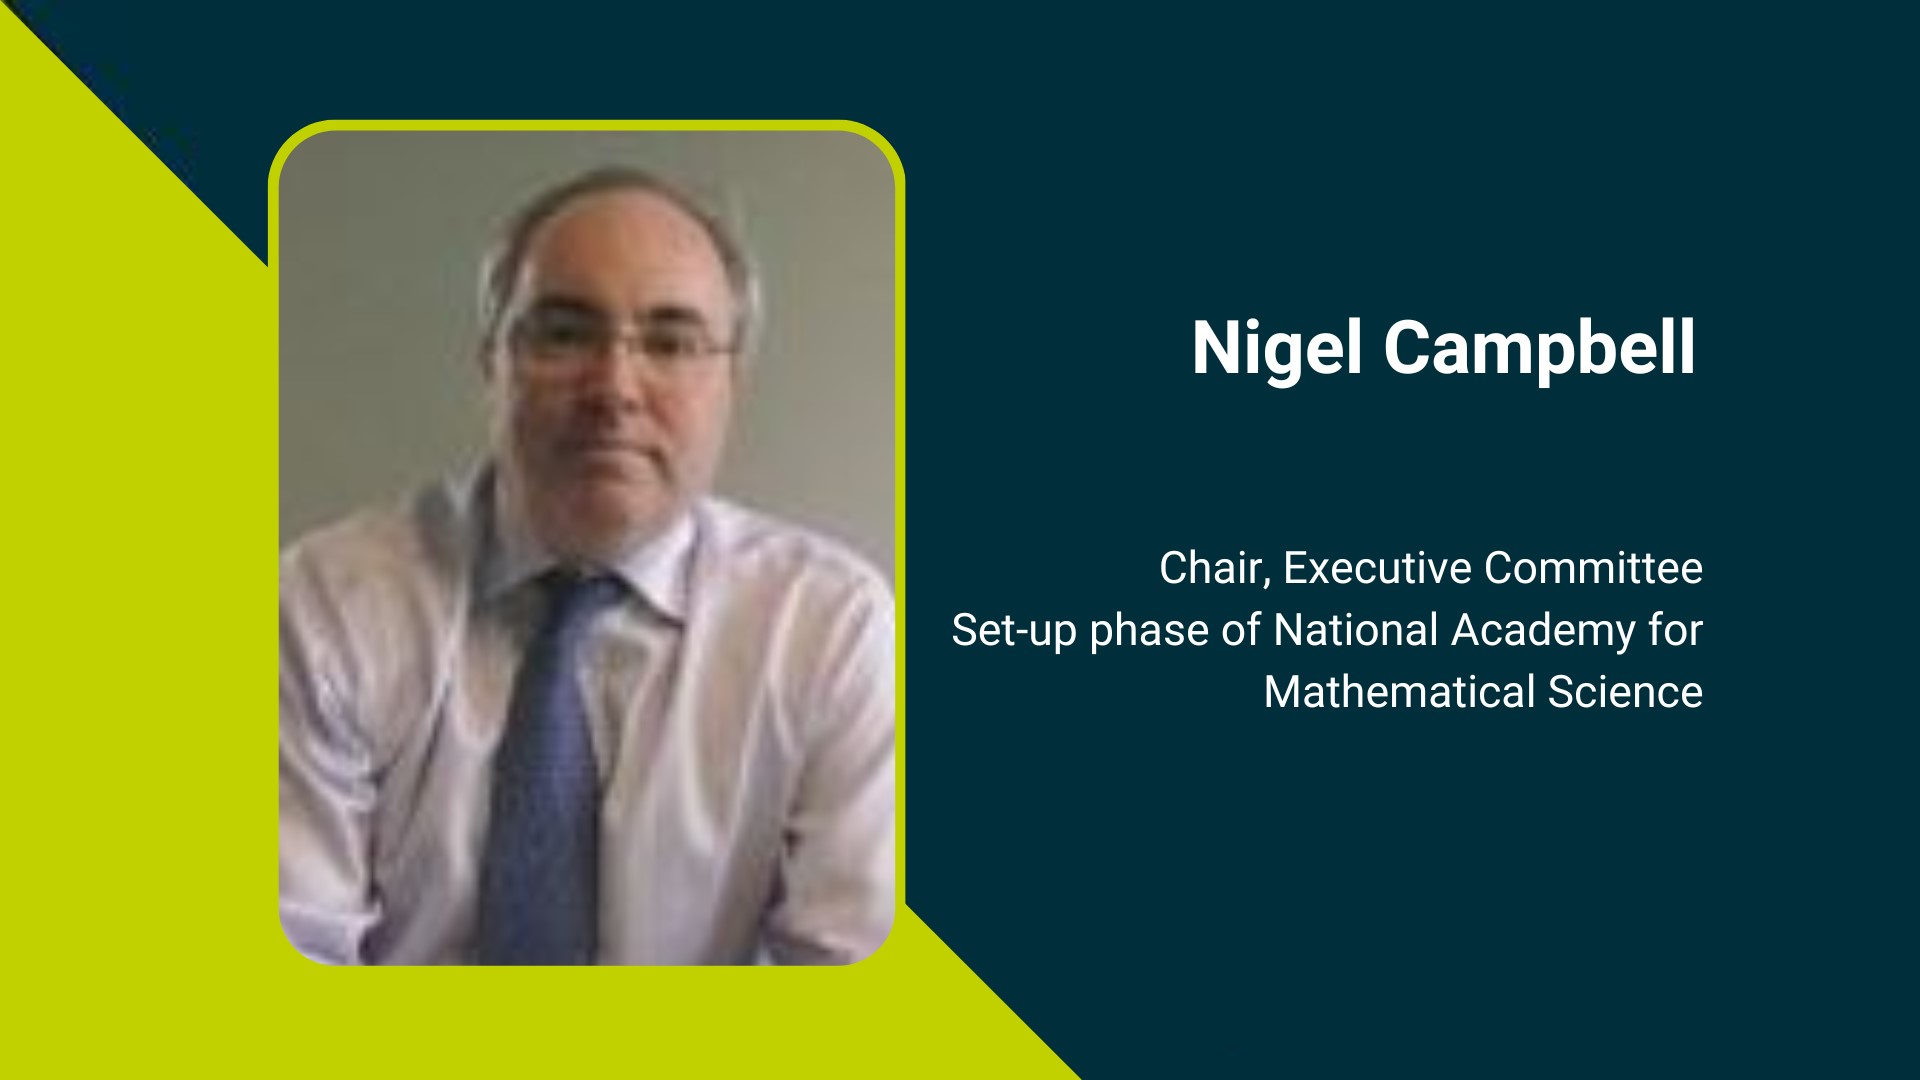 CSaP Fellow Nigel Campbell